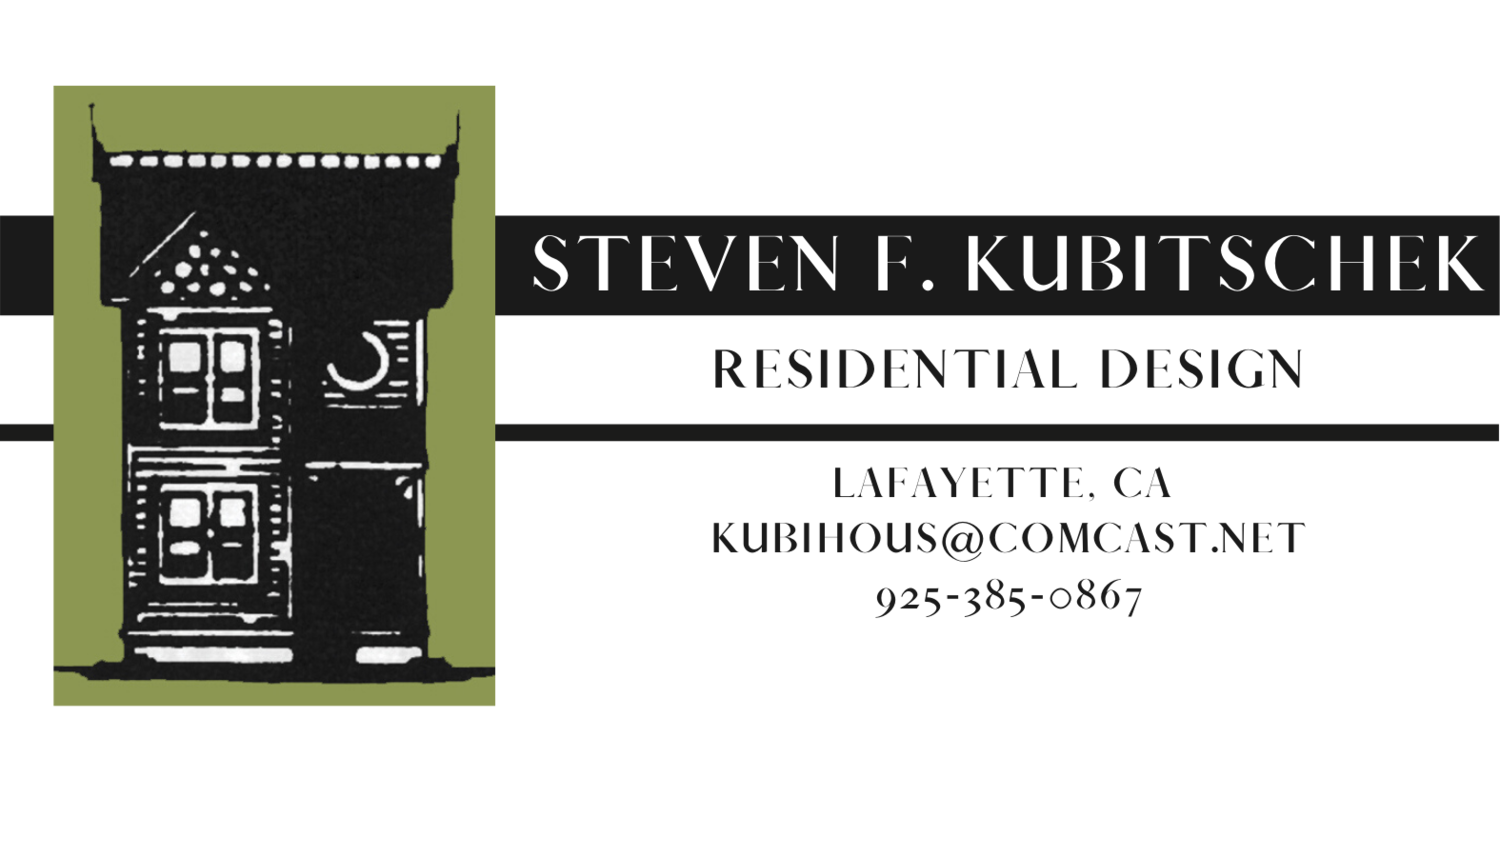 Steven F. Kubitschek Residential Designs